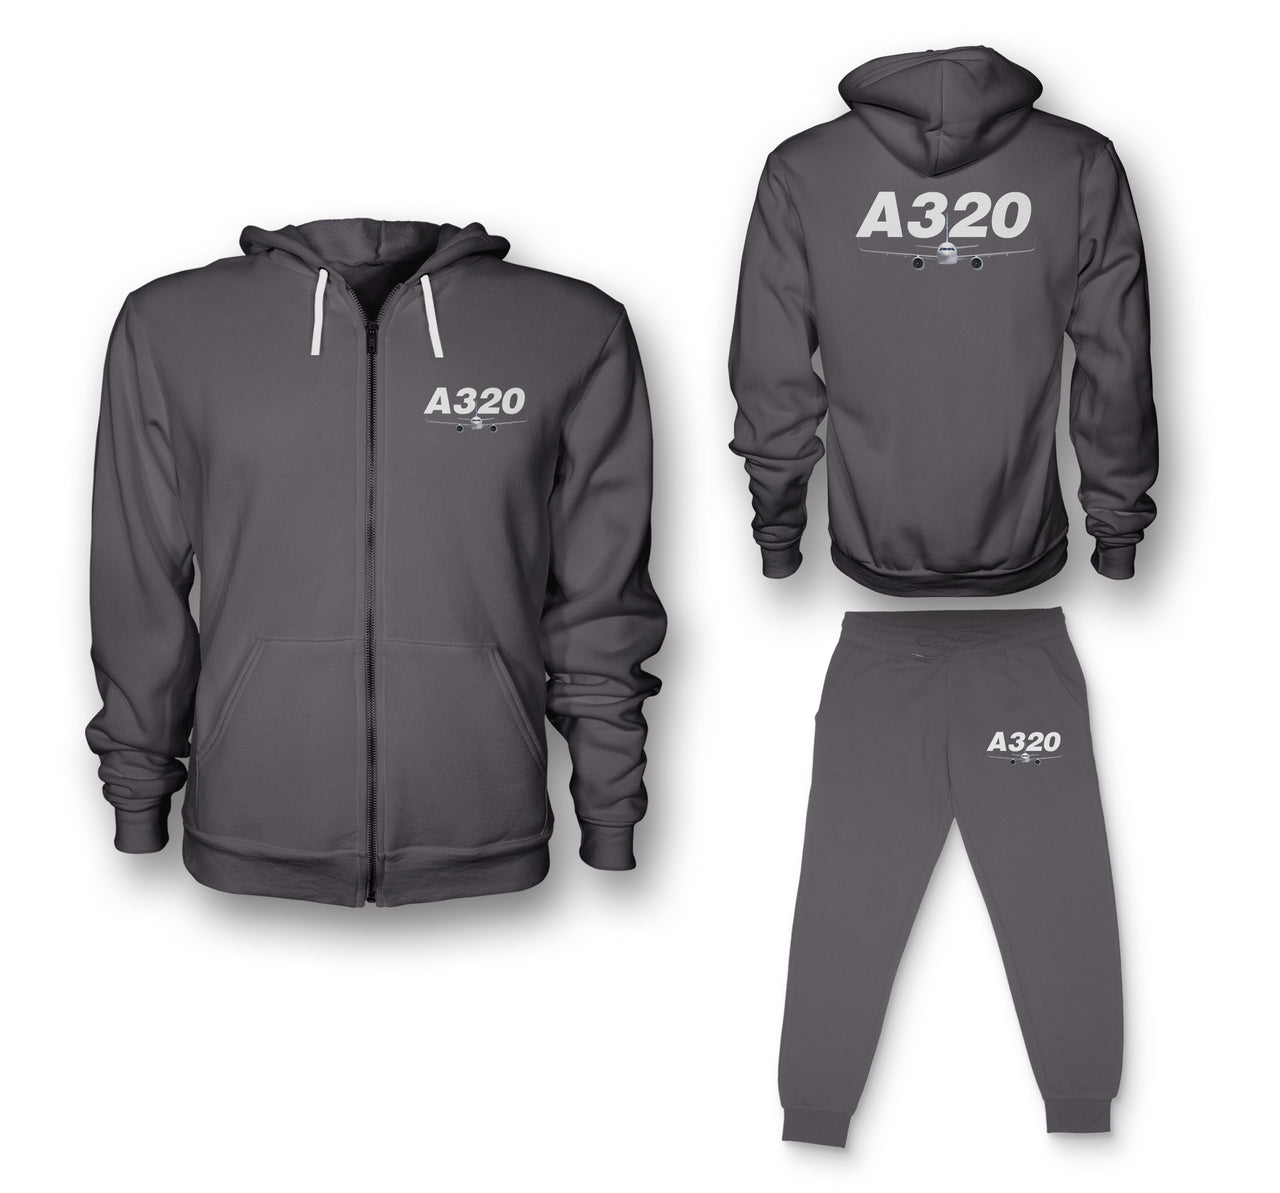 Super Airbus A320 Designed Zipped Hoodies & Sweatpants Set